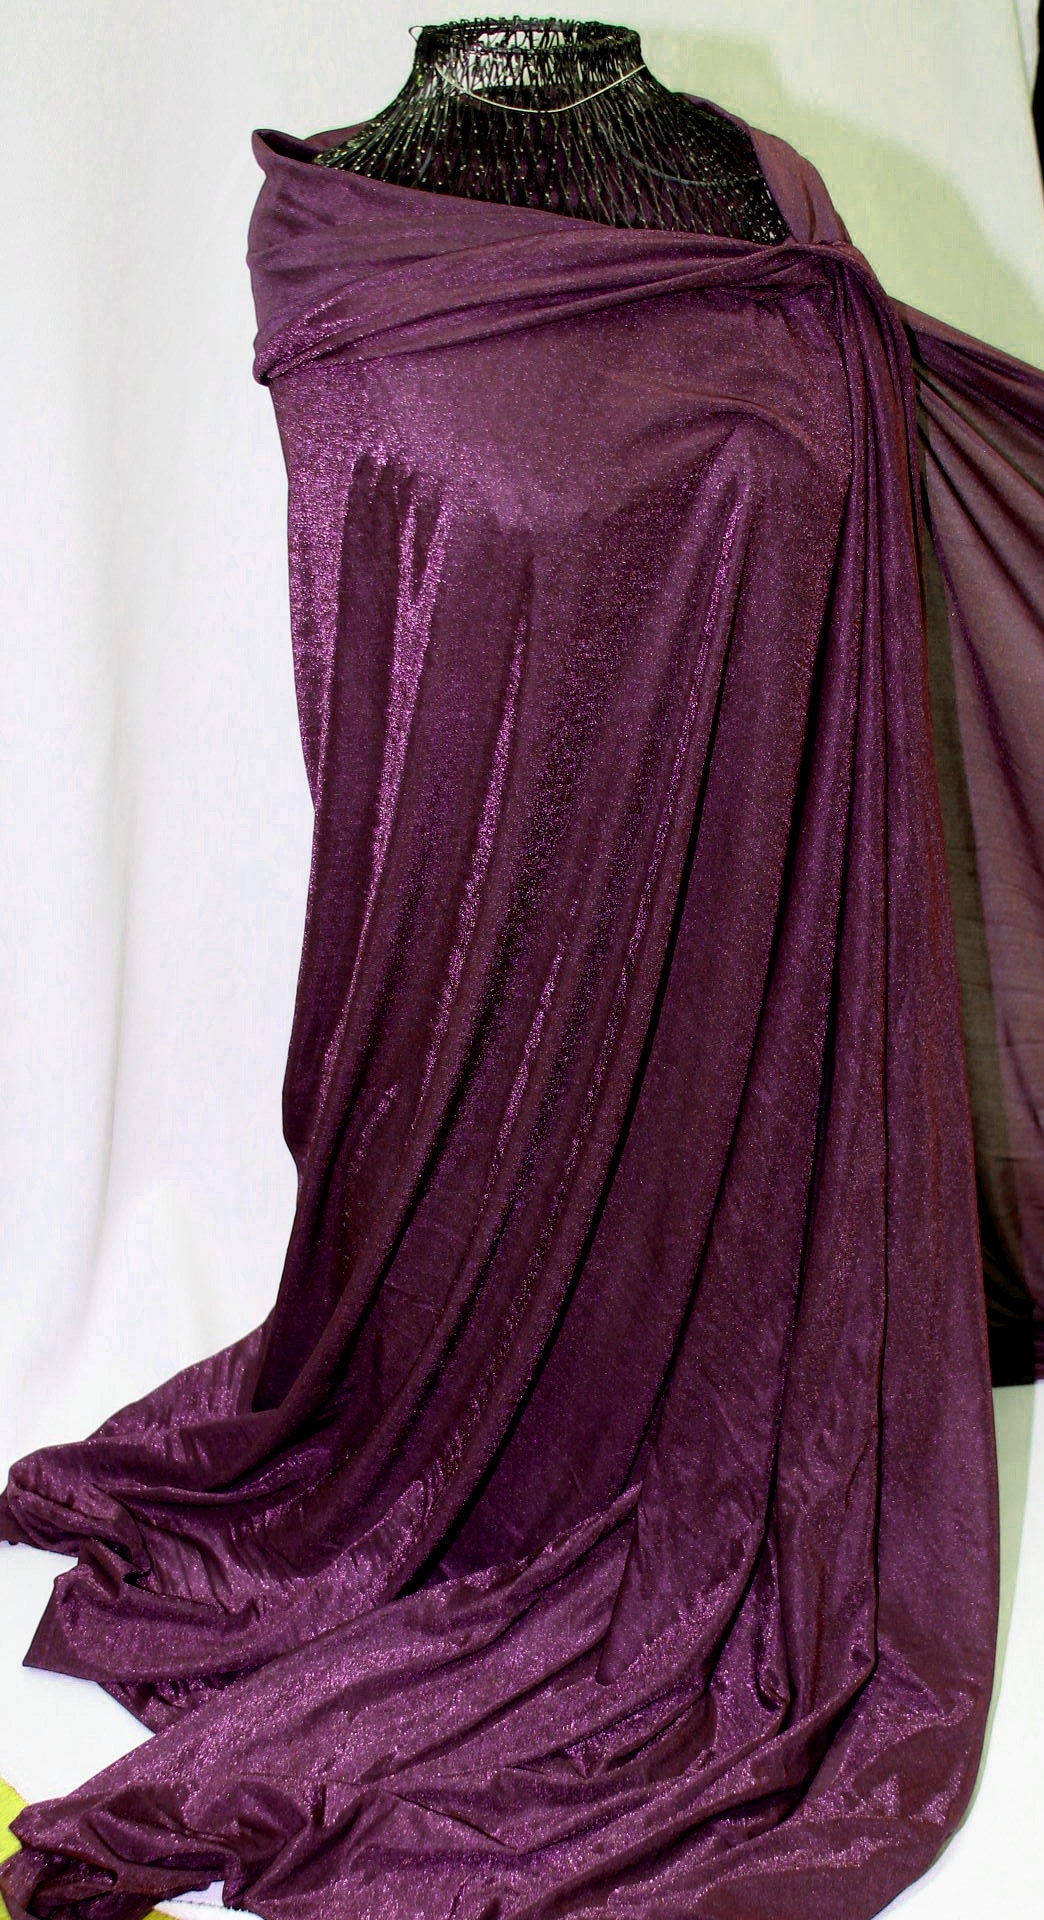 Fabric Glissenette dark dusty plum purple semi sheer Sparkle | Etsy